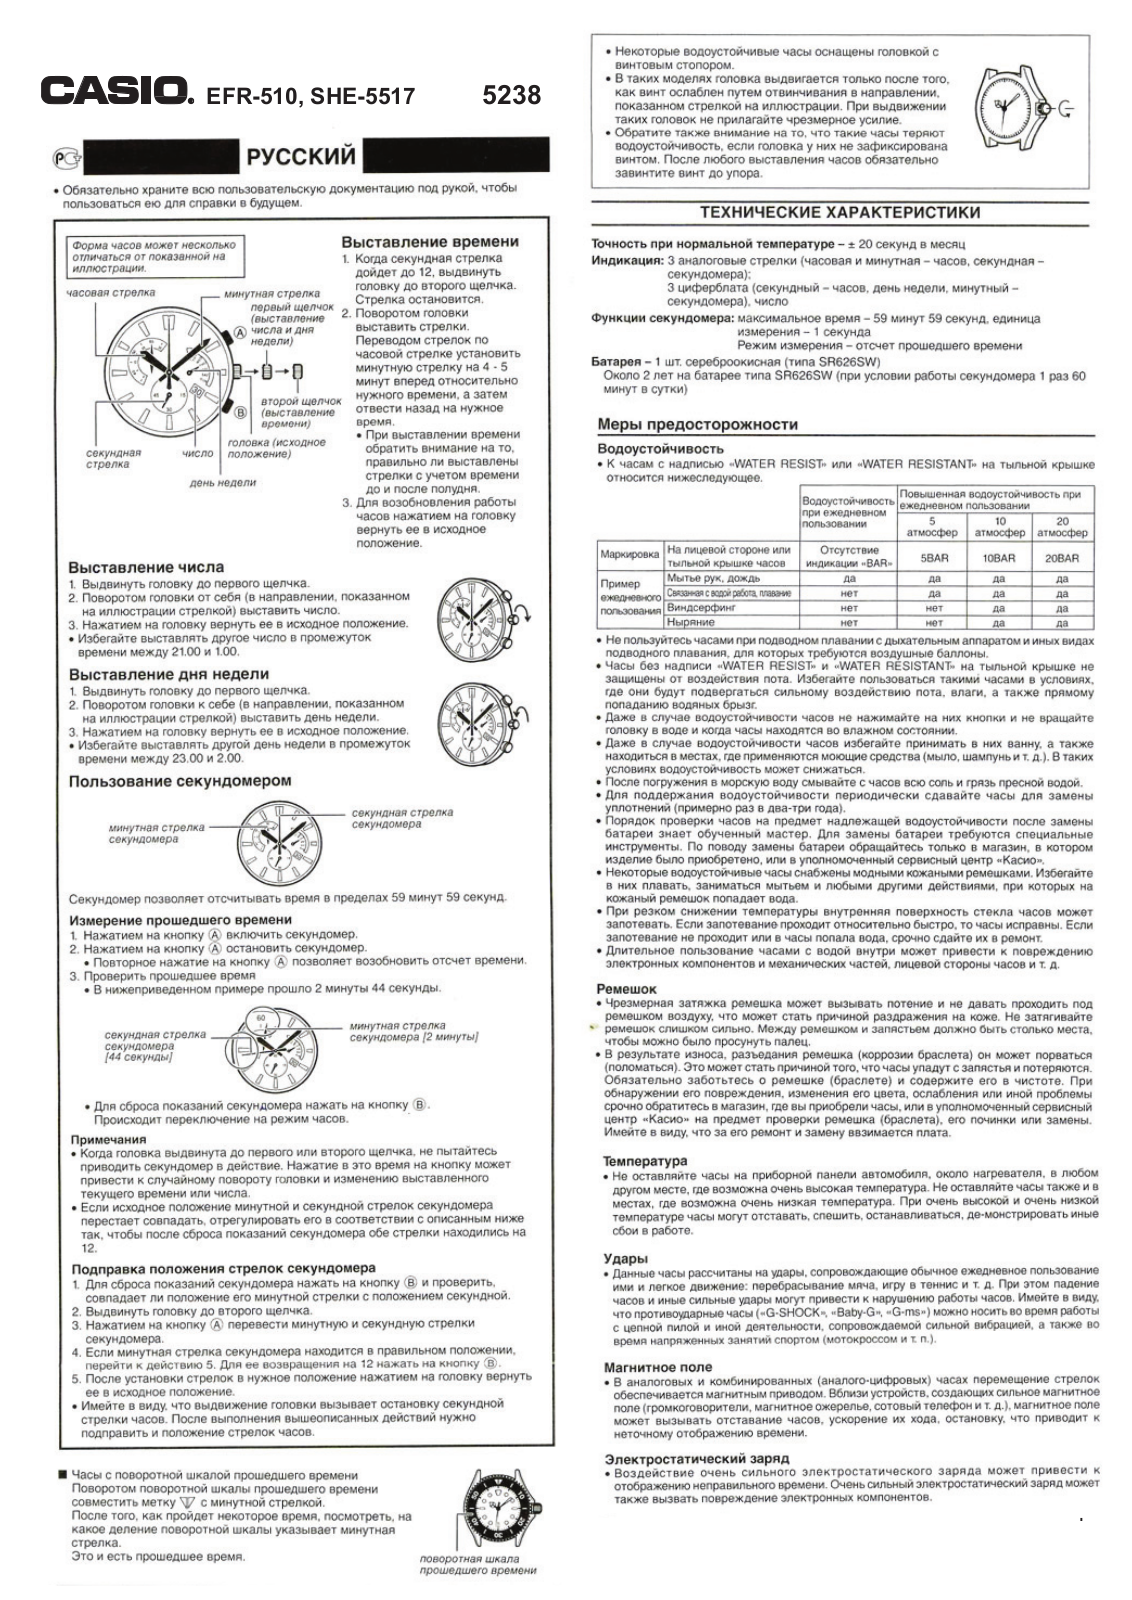 Casio EFR-510D-7A User Manual